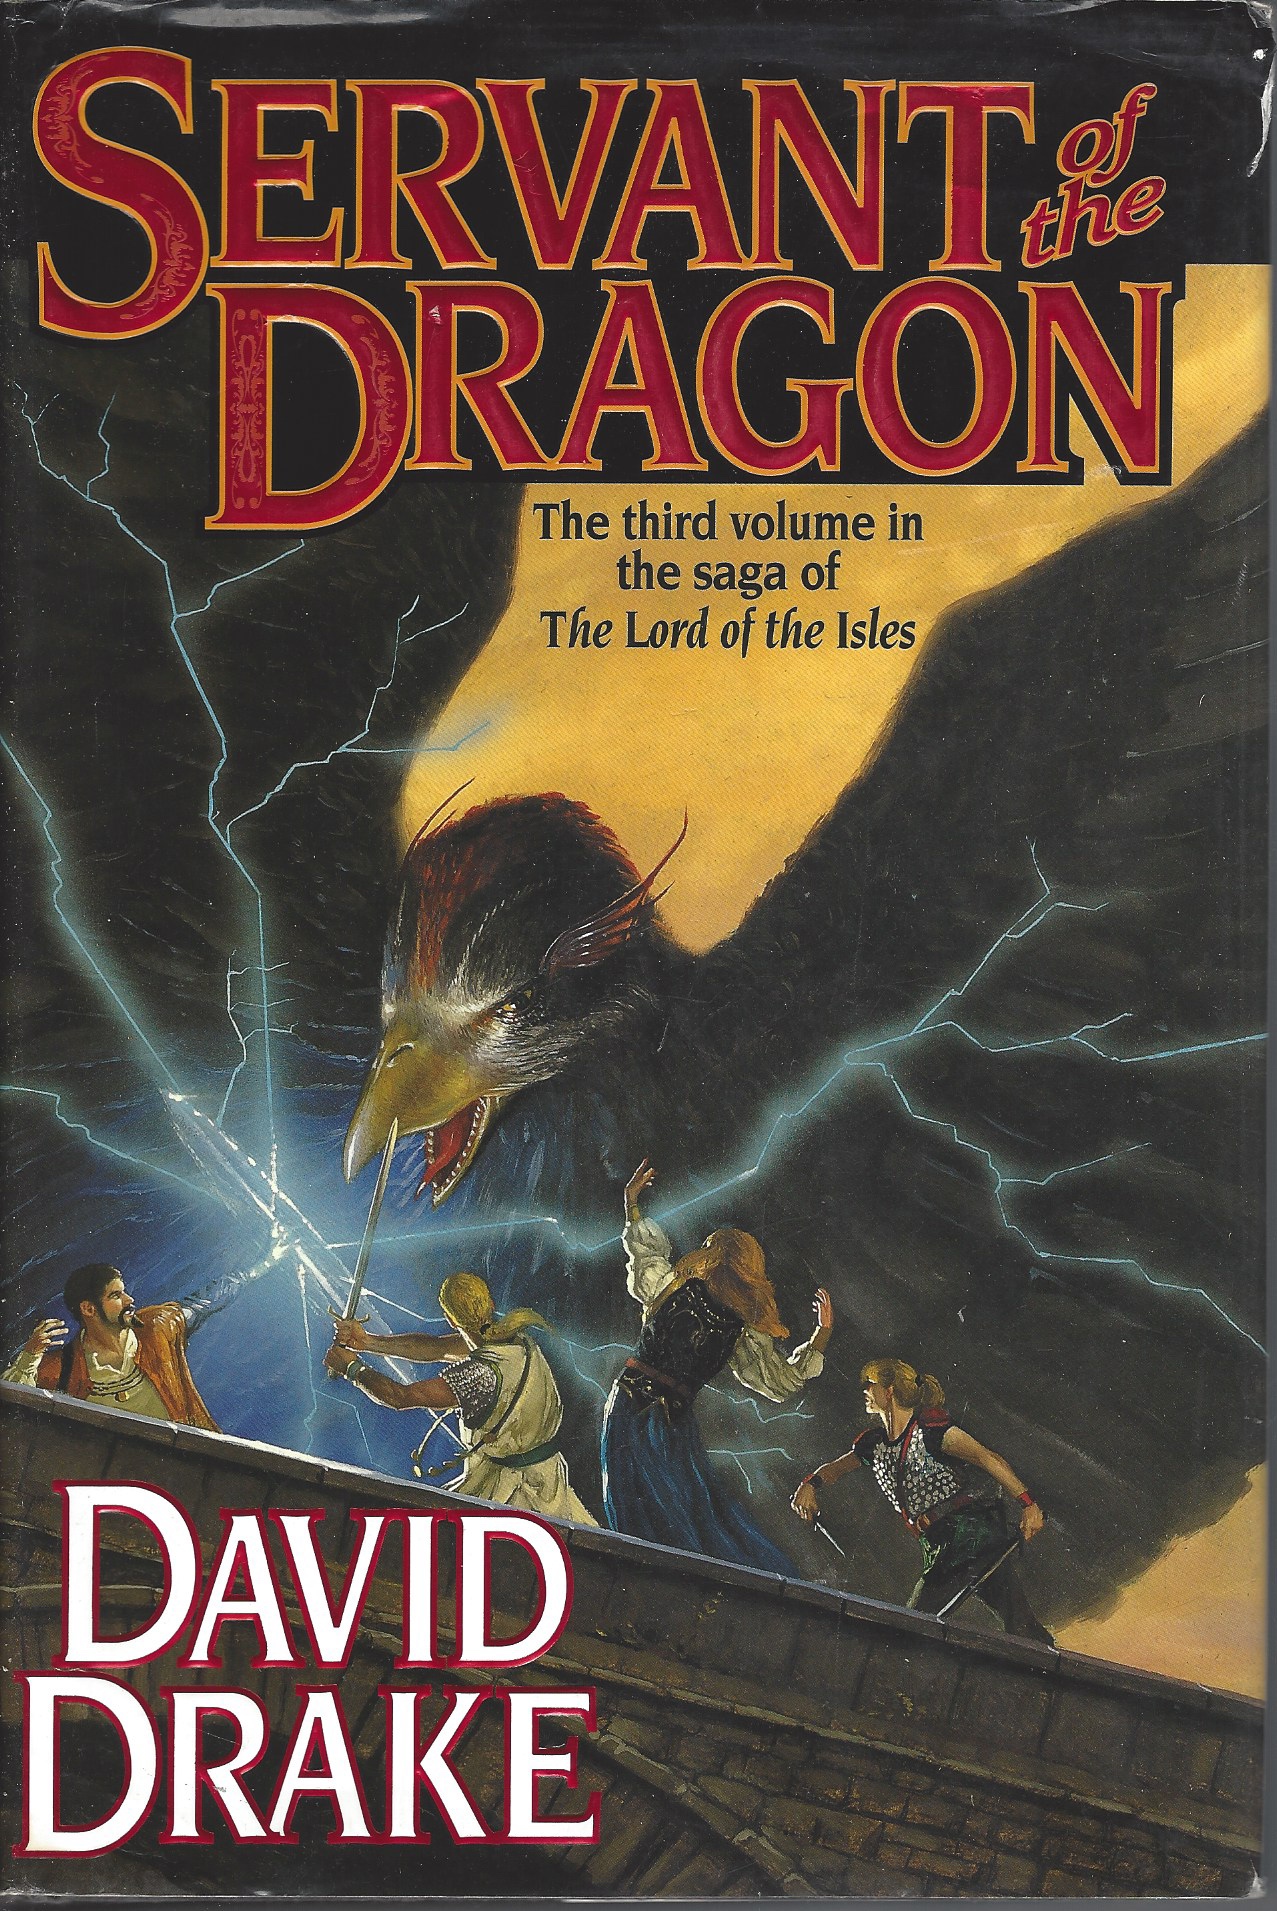 DRAKE DAVID - Servant of the Dragon